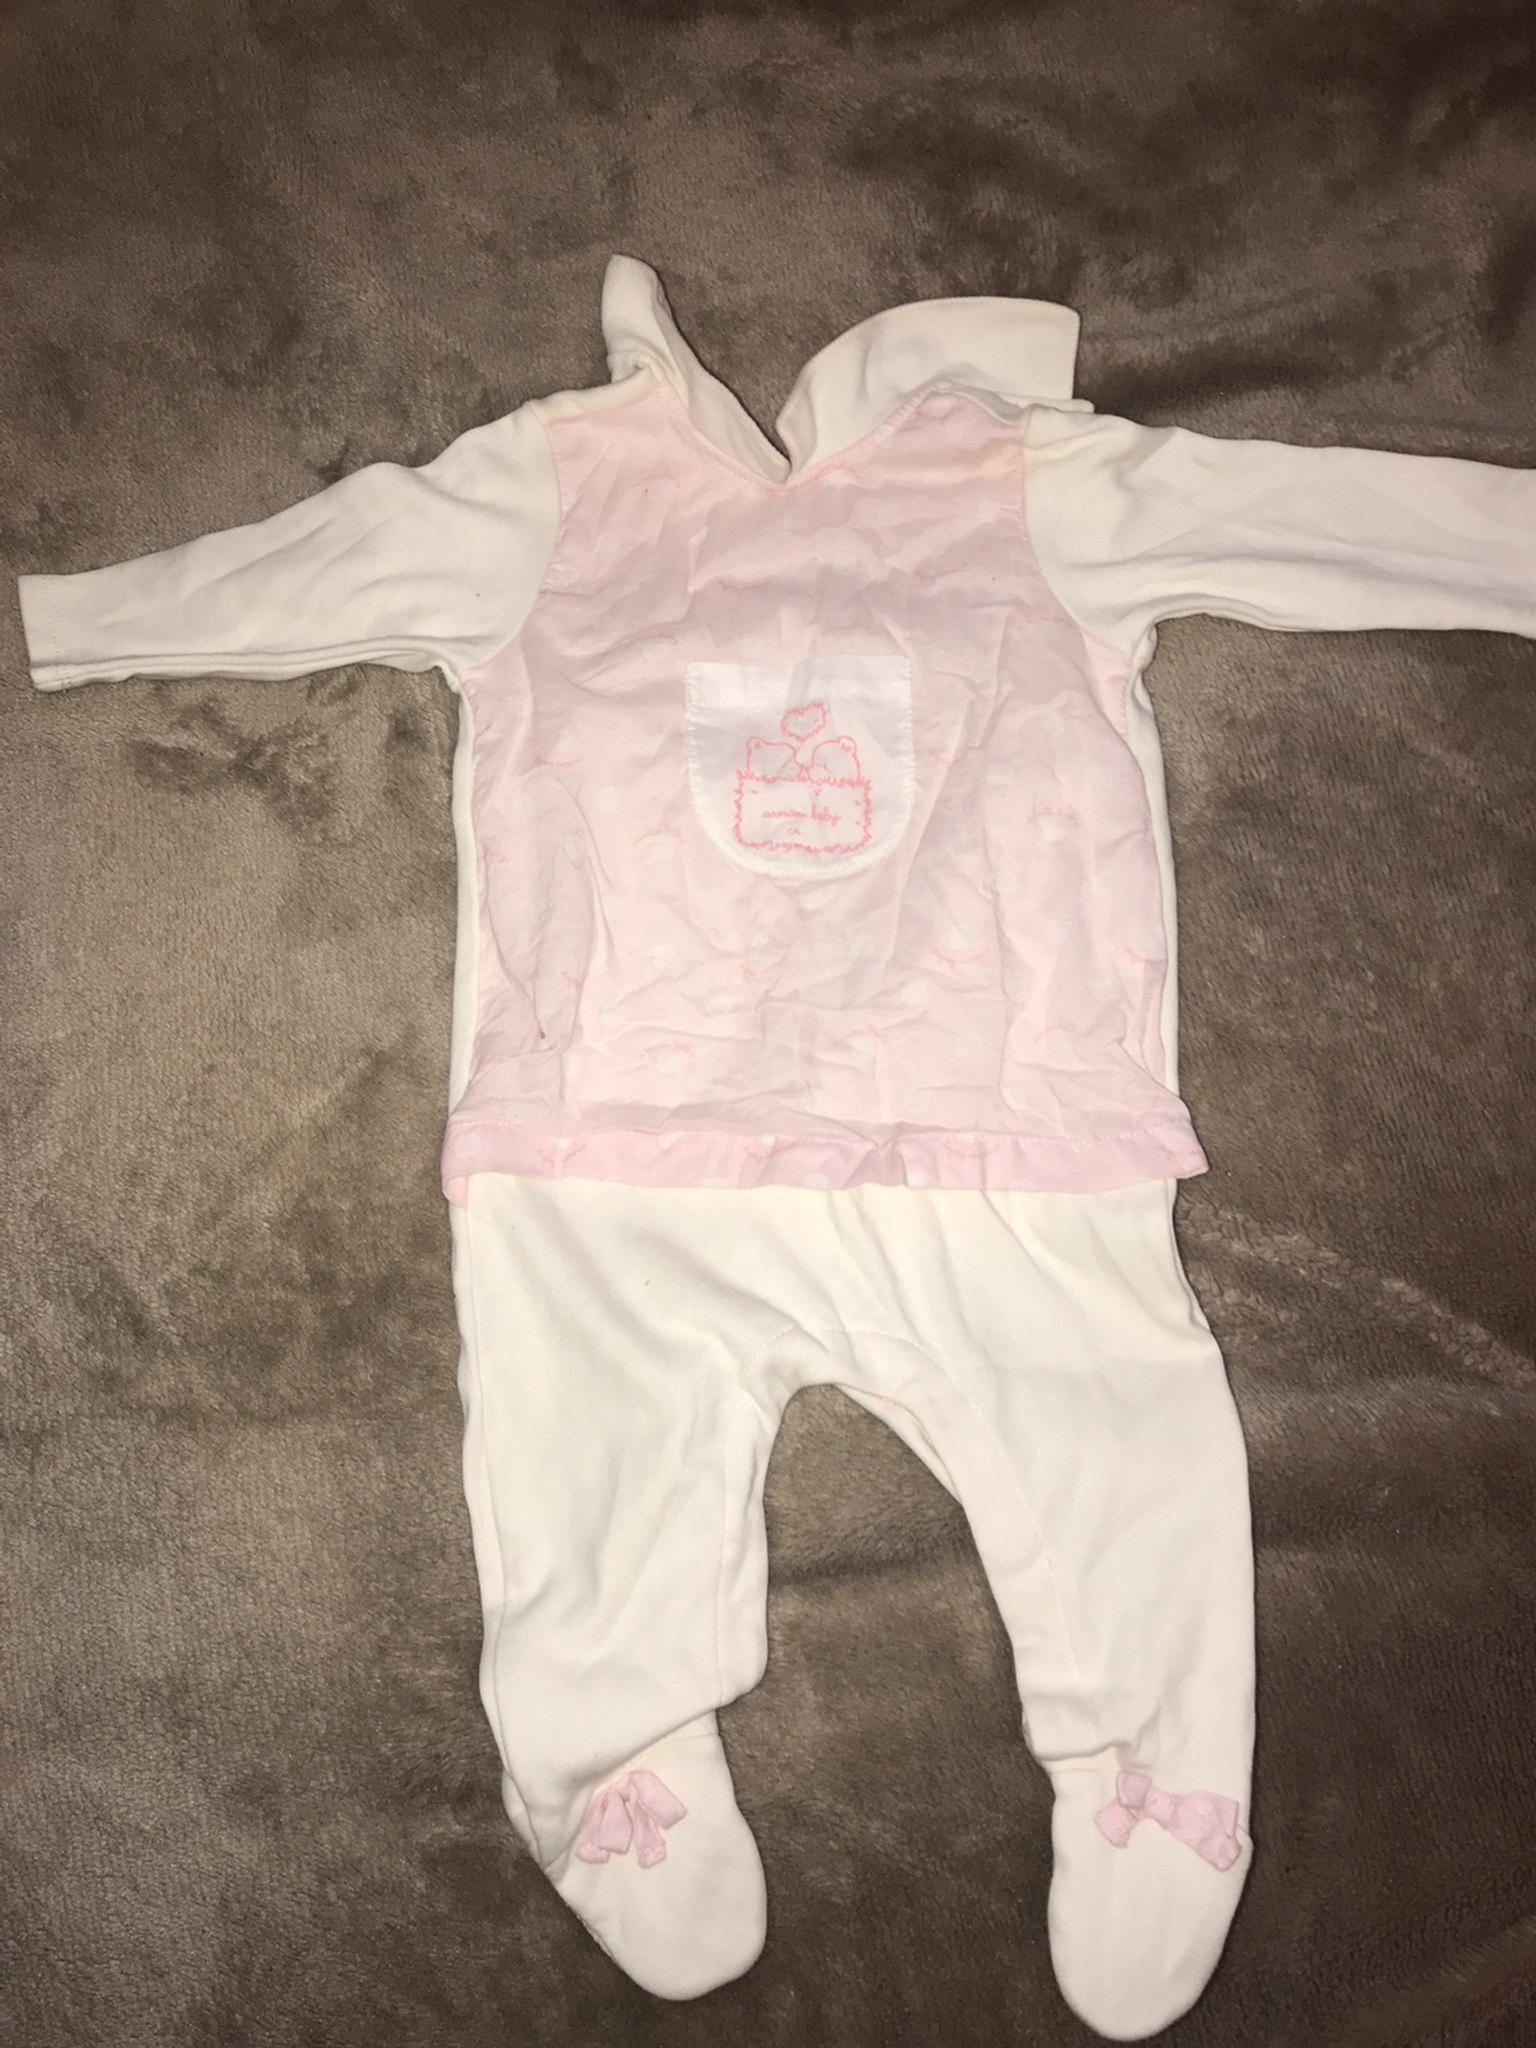 Armani baby body suits in B5 Birmingham 